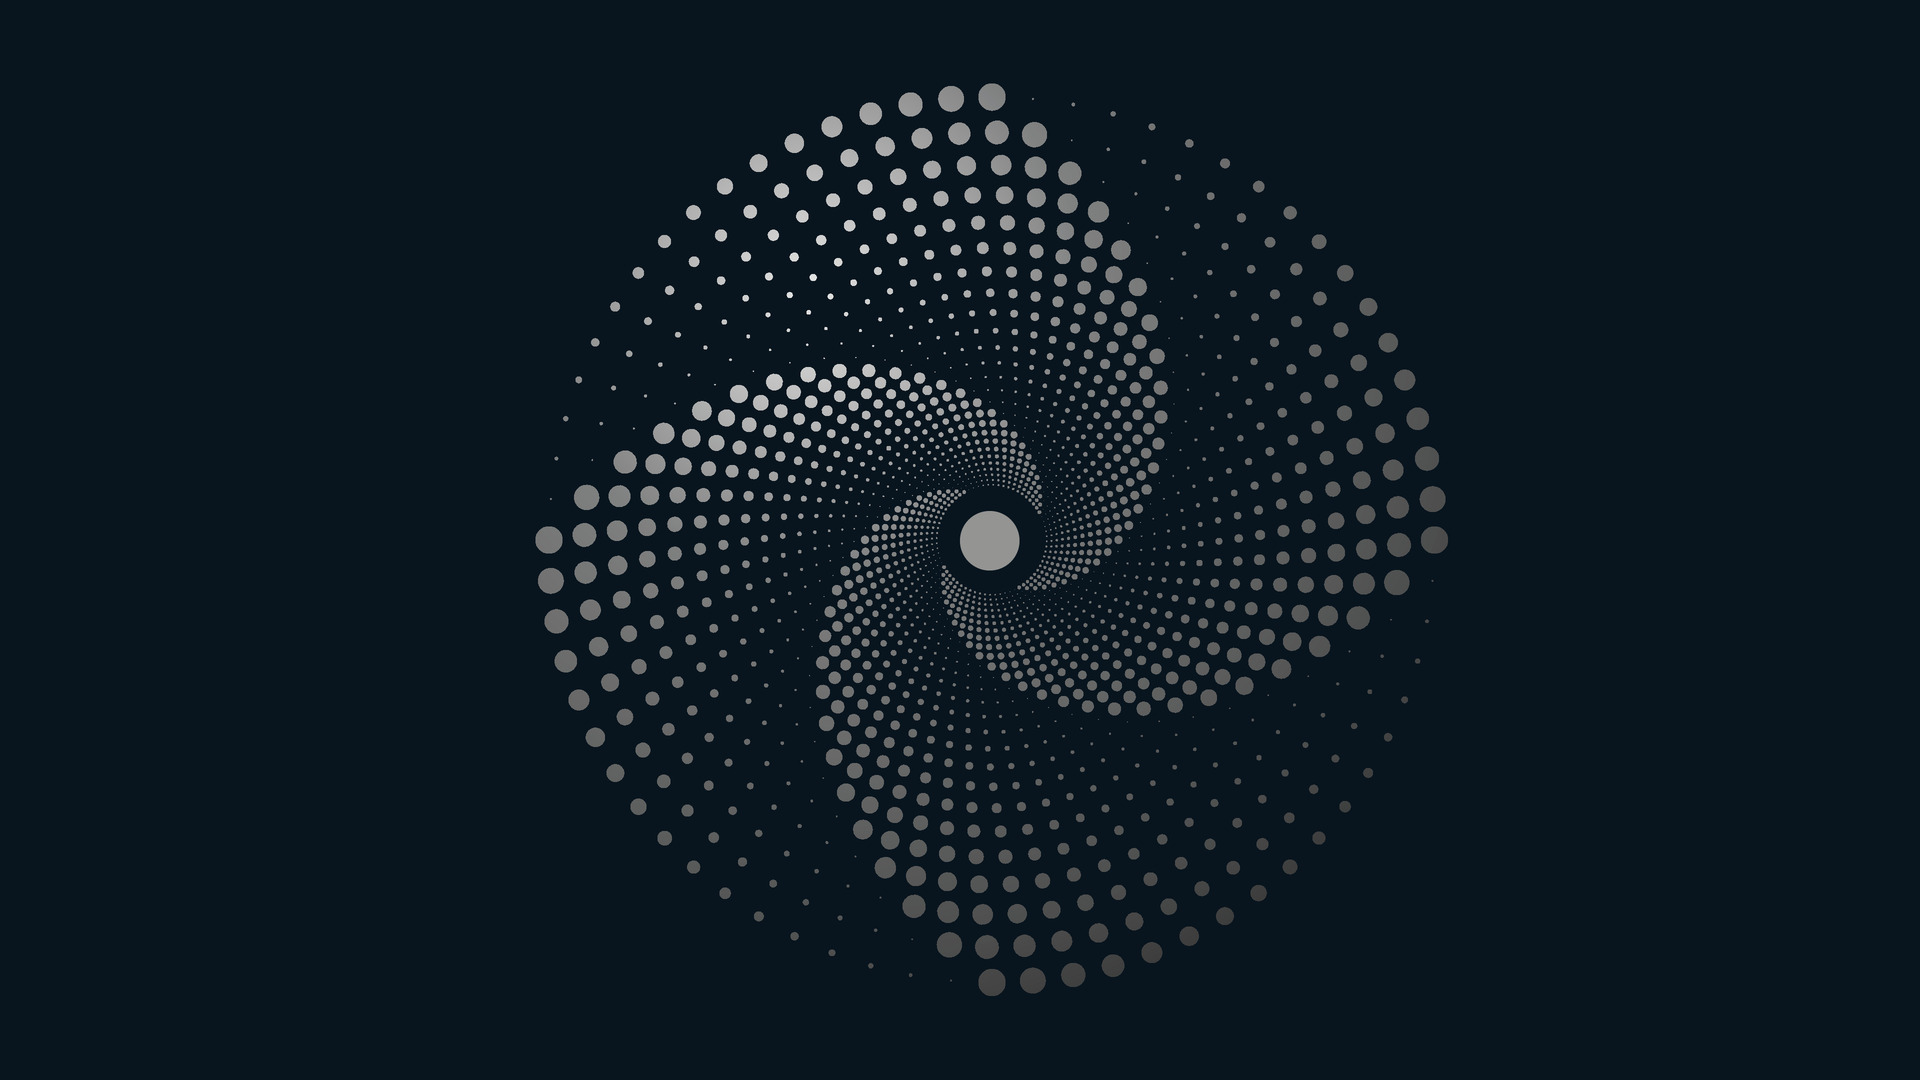 Spiral Art Activity, Make Cool Spiral Images